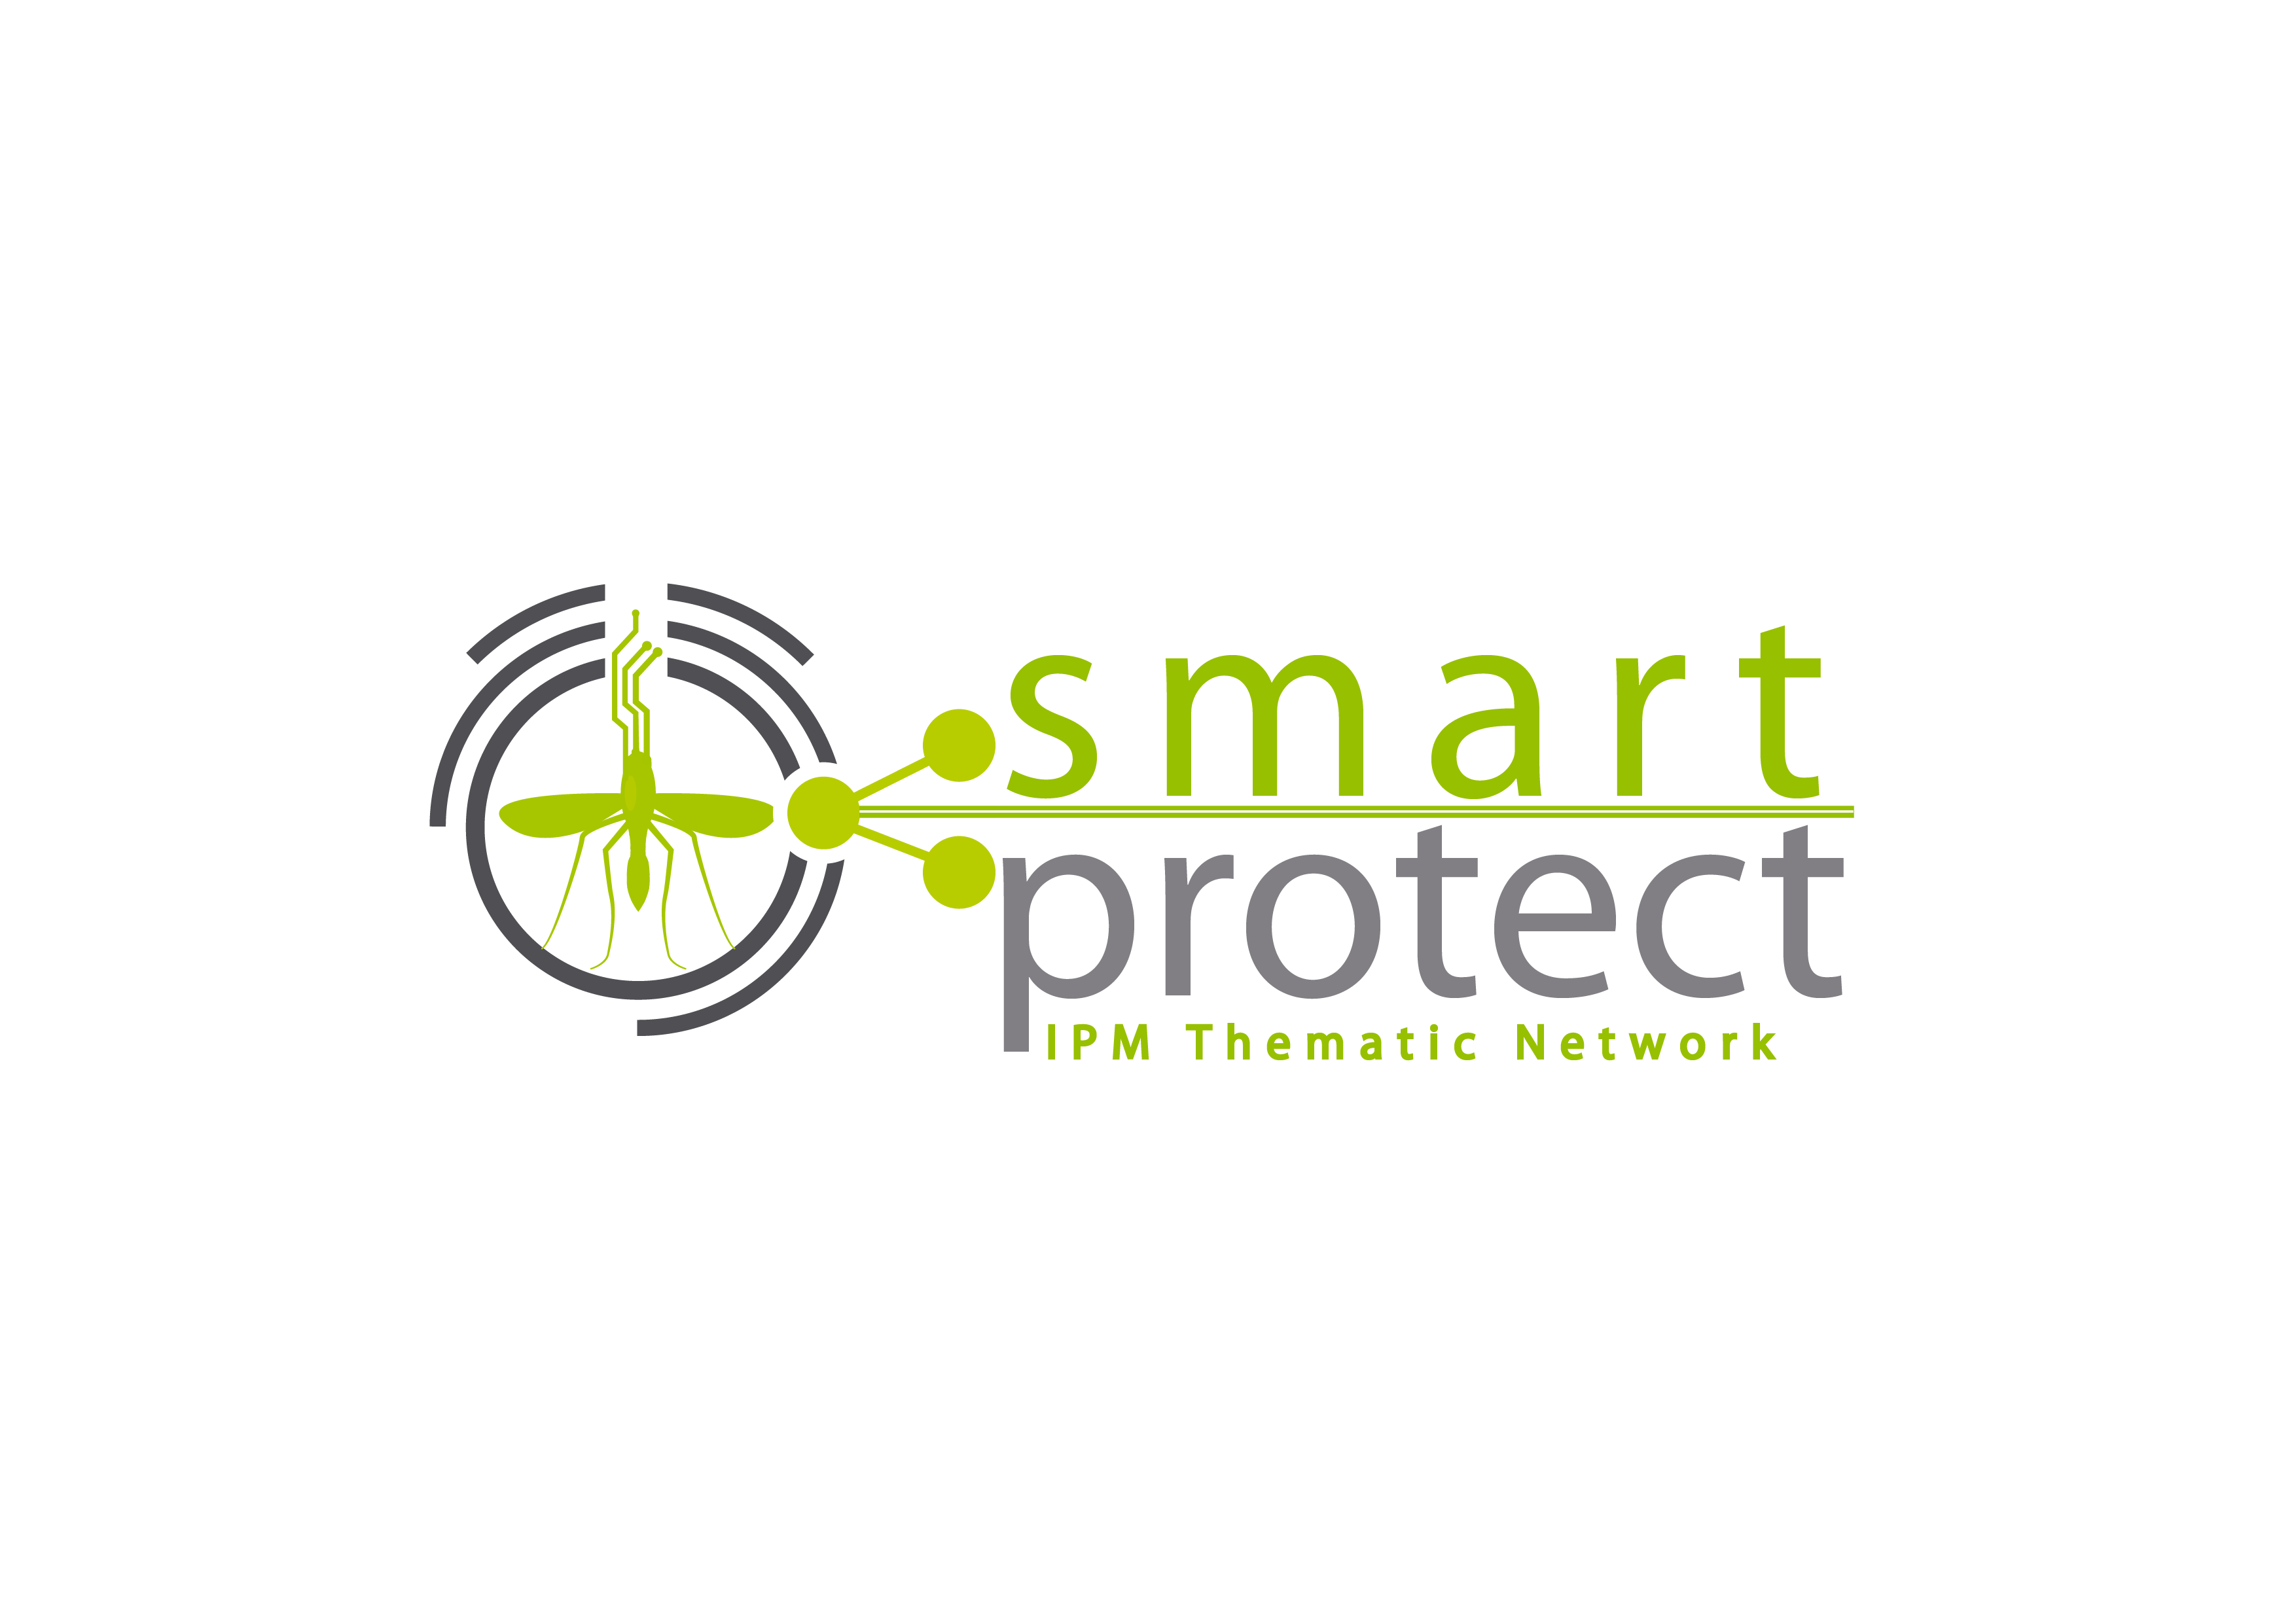 SmartProtect